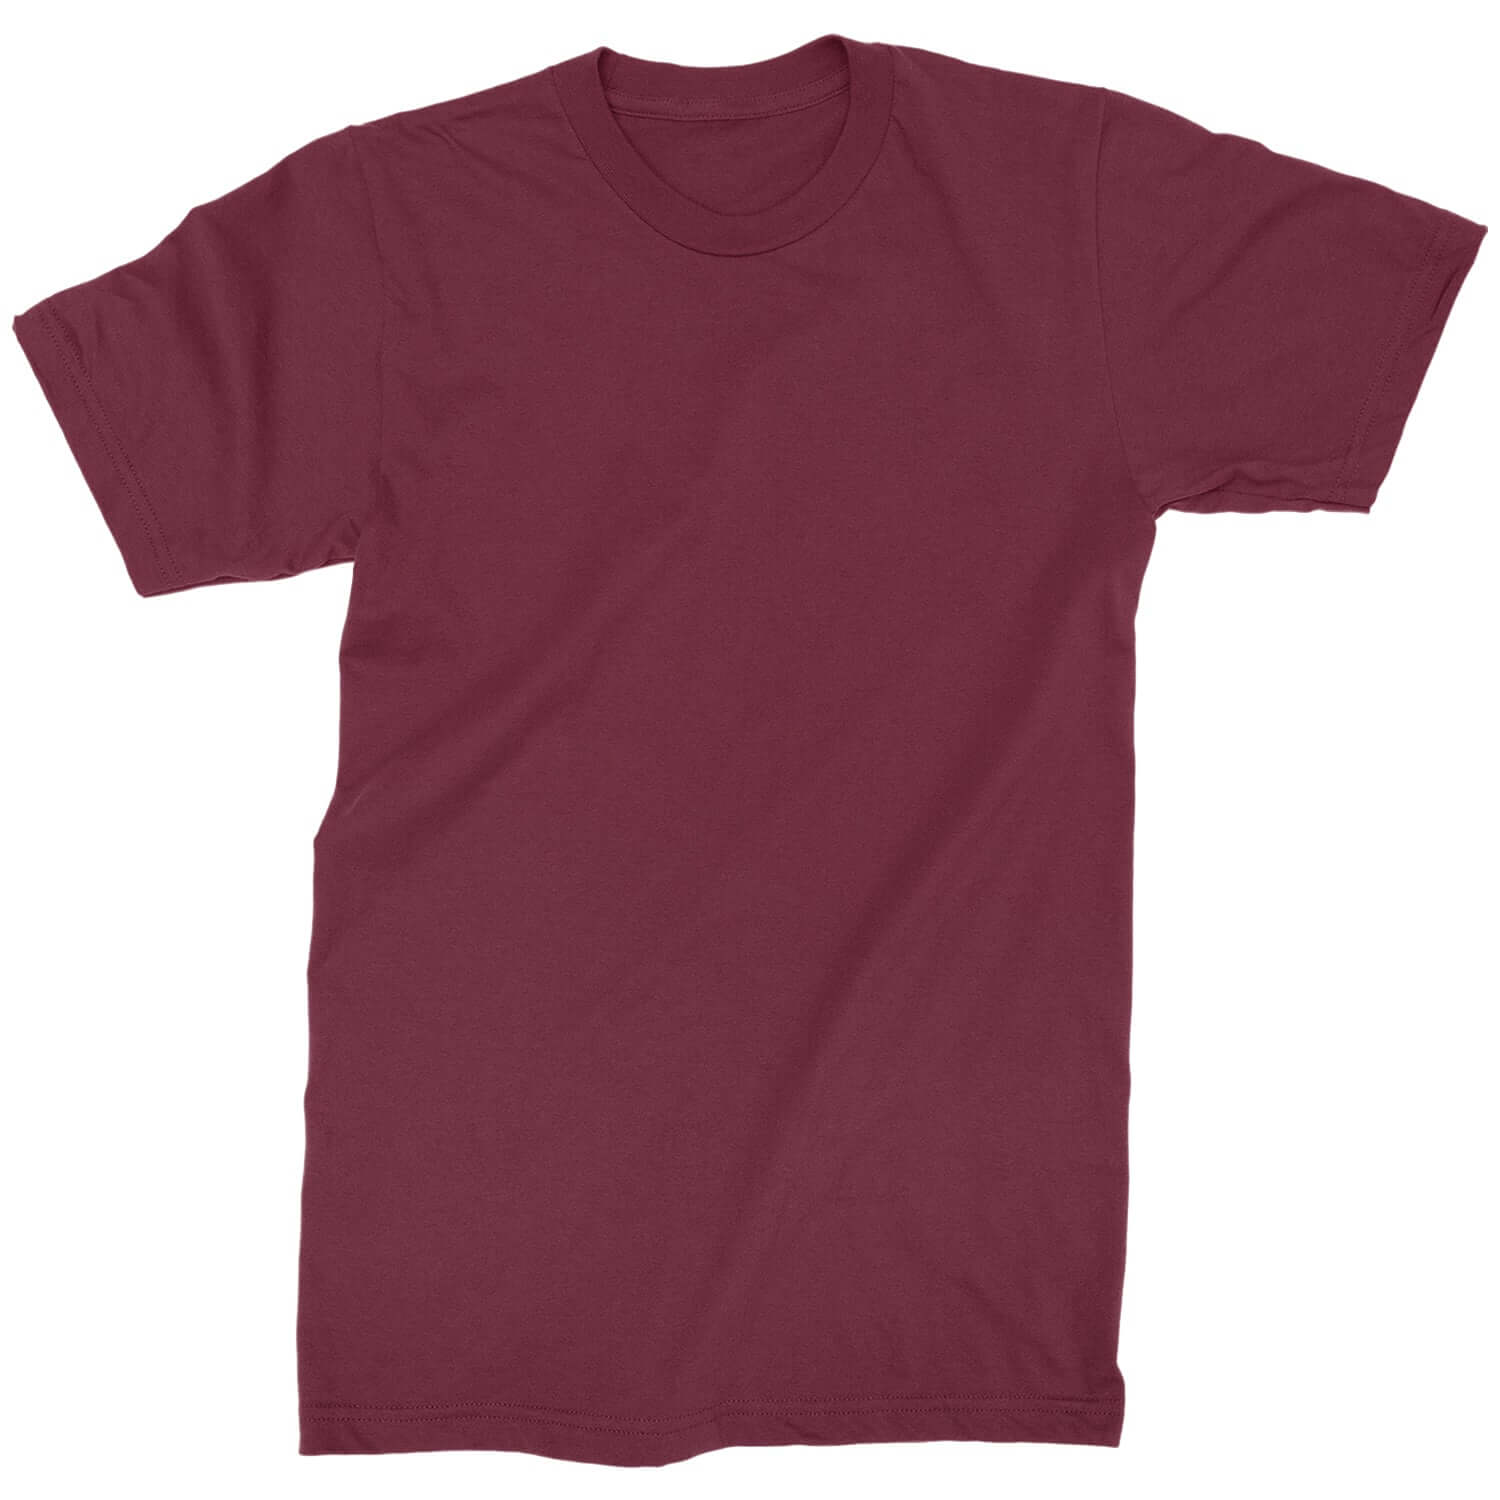 Basics - Plain Blank Mens T-shirt blank, clothing, plain, tshirts by Expression Tees